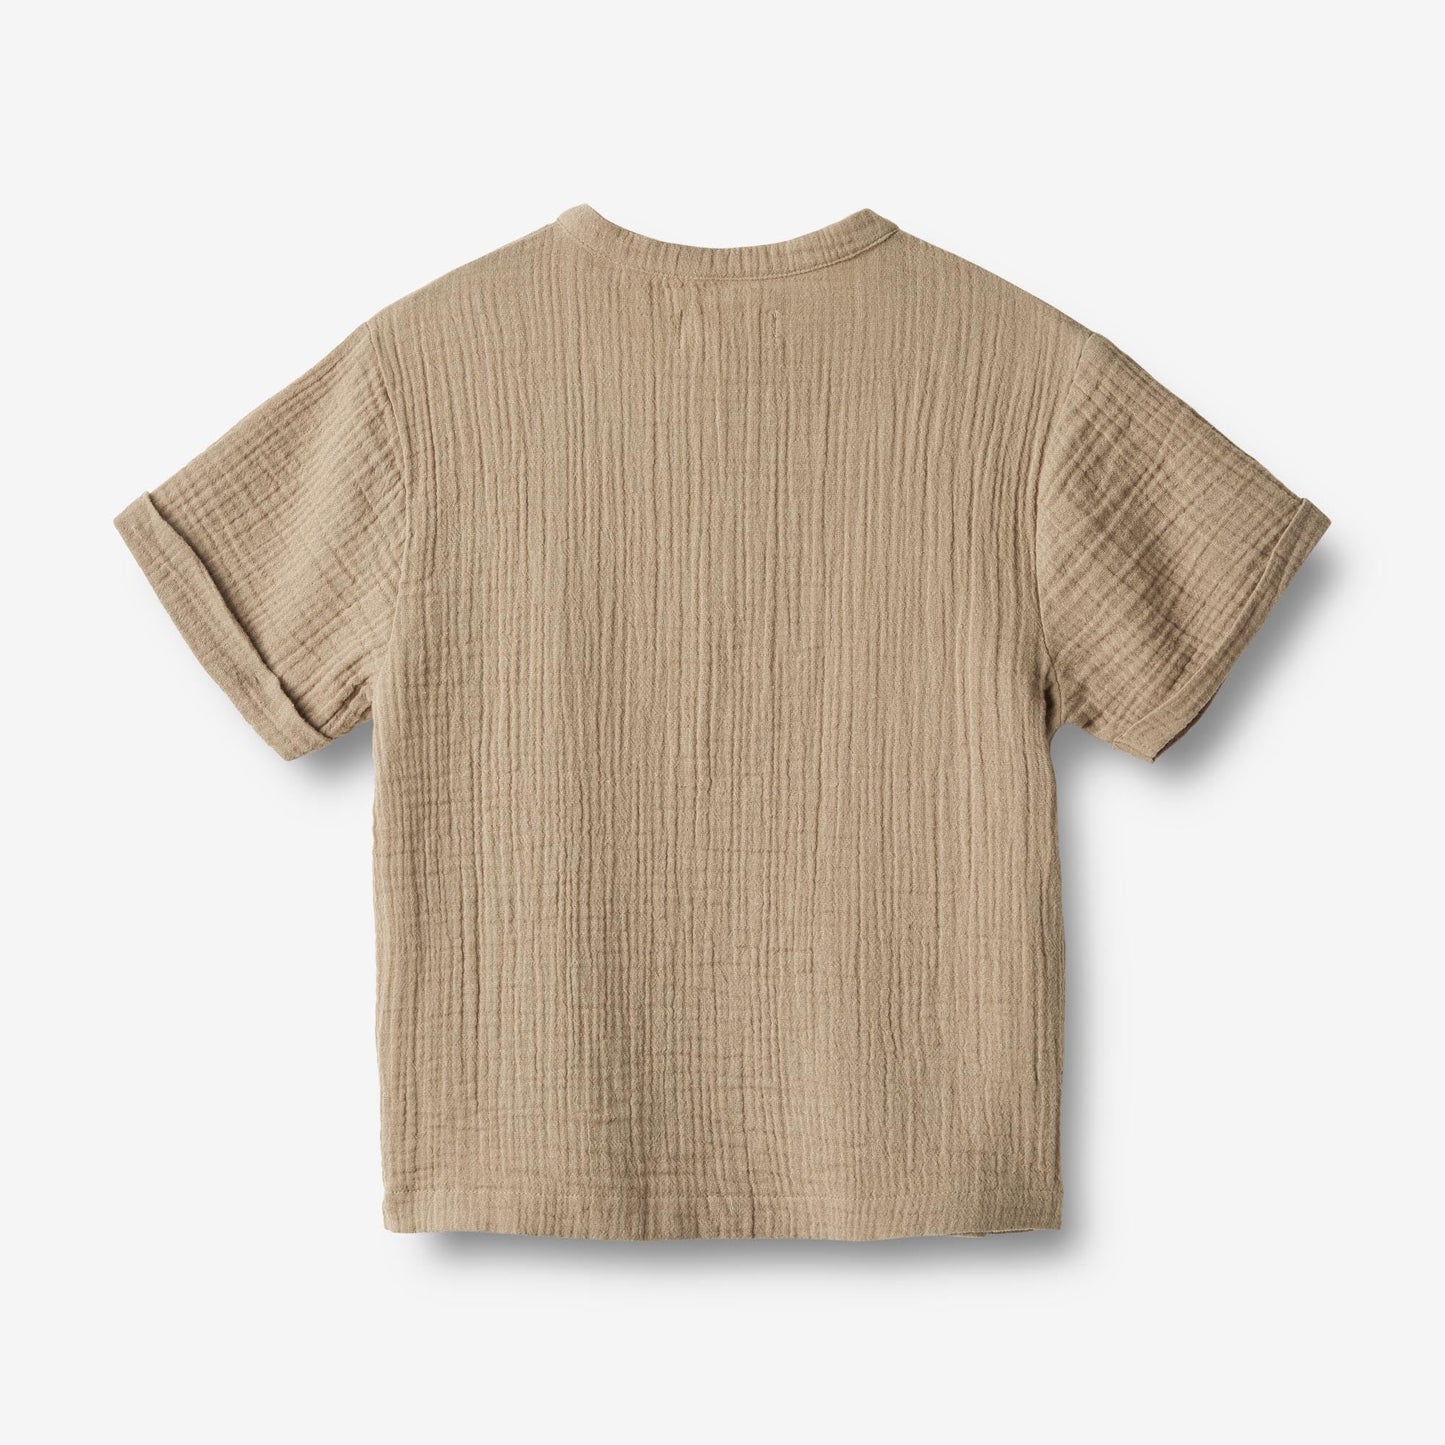 Wheat 'Svend' S/S Children's Shirt - Beige Stone